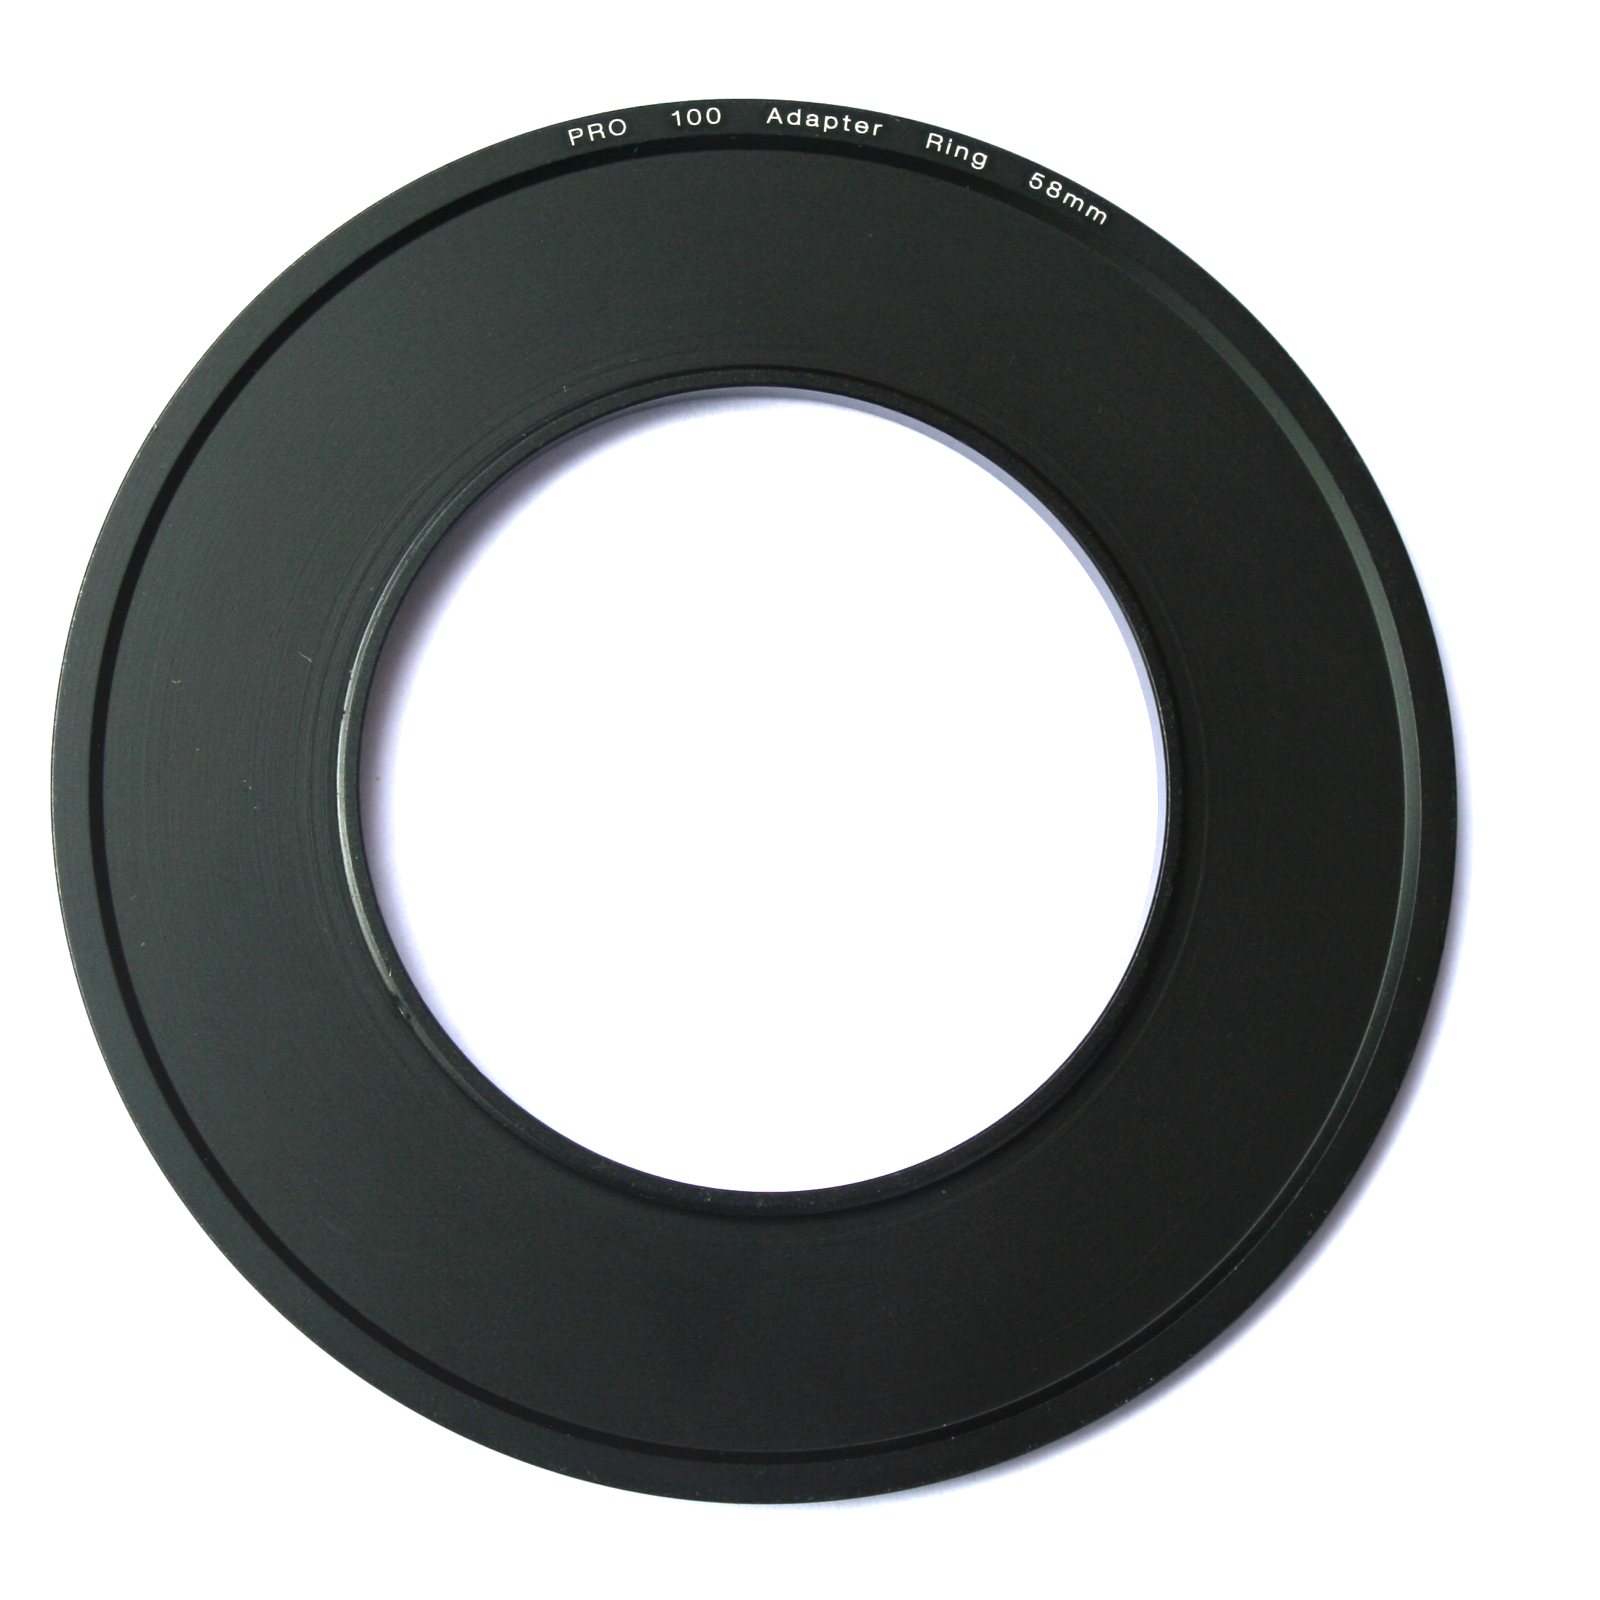 Tiffen PRO100 52mm adapter ring